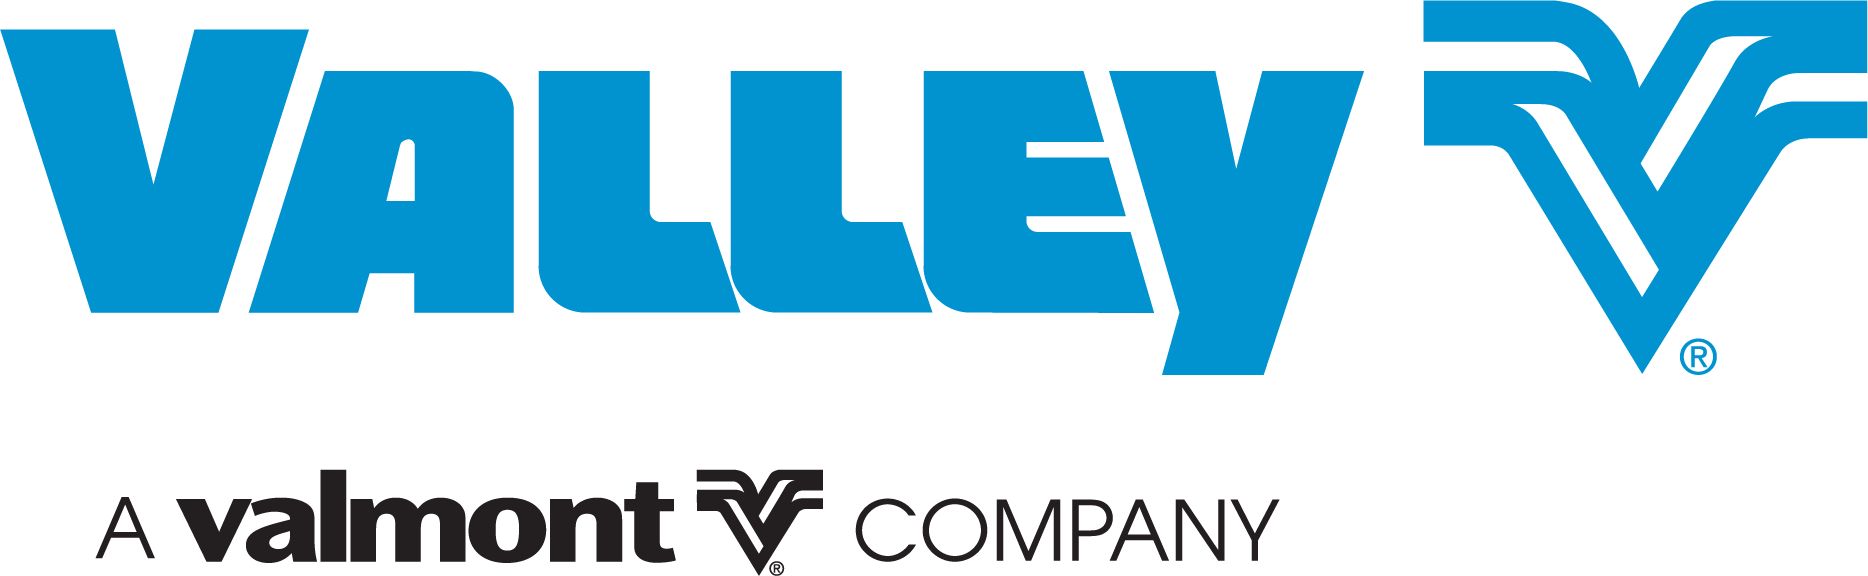 Valley - A Valmont Company_Horizontal_Logos